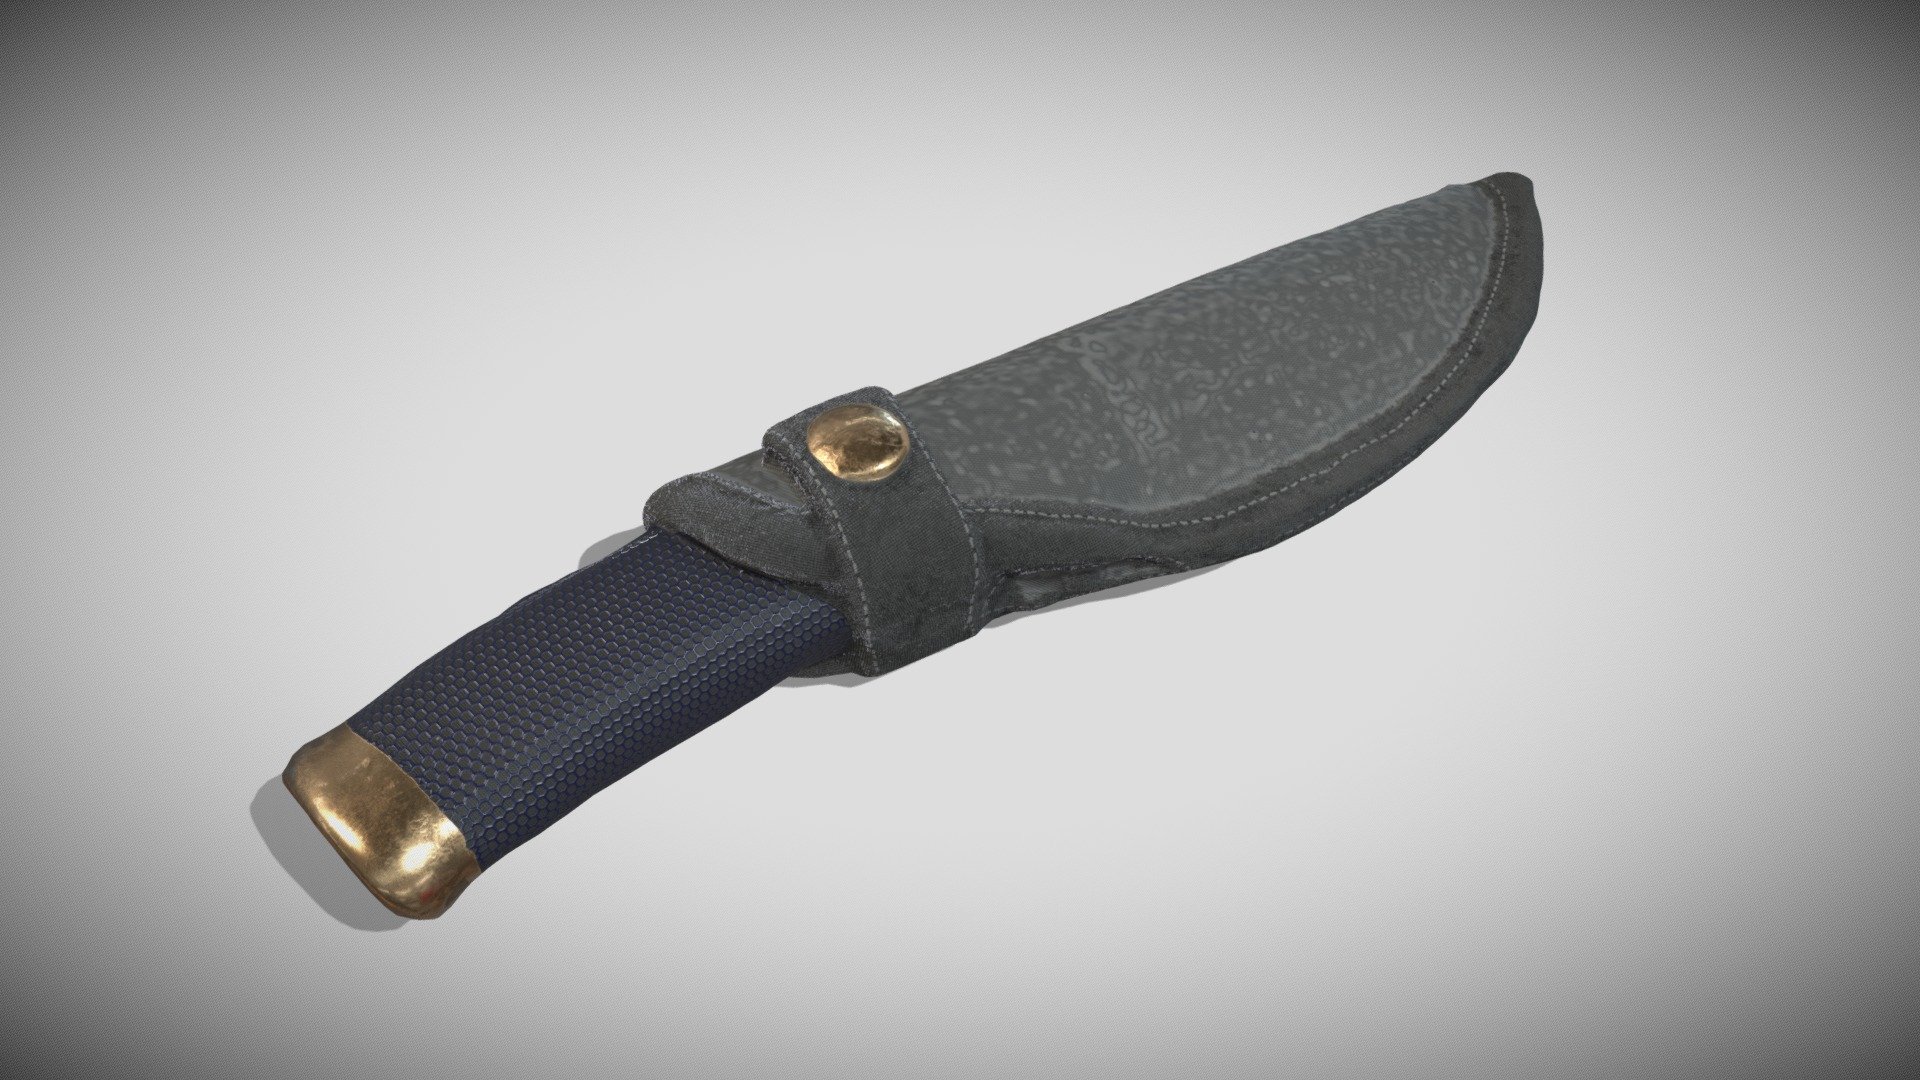 One Material 4 K PBR Metalness

All Quads - Knife - Buck - Buy Royalty Free 3D model by Francesco Coldesina (@topfrank2013) 3d model